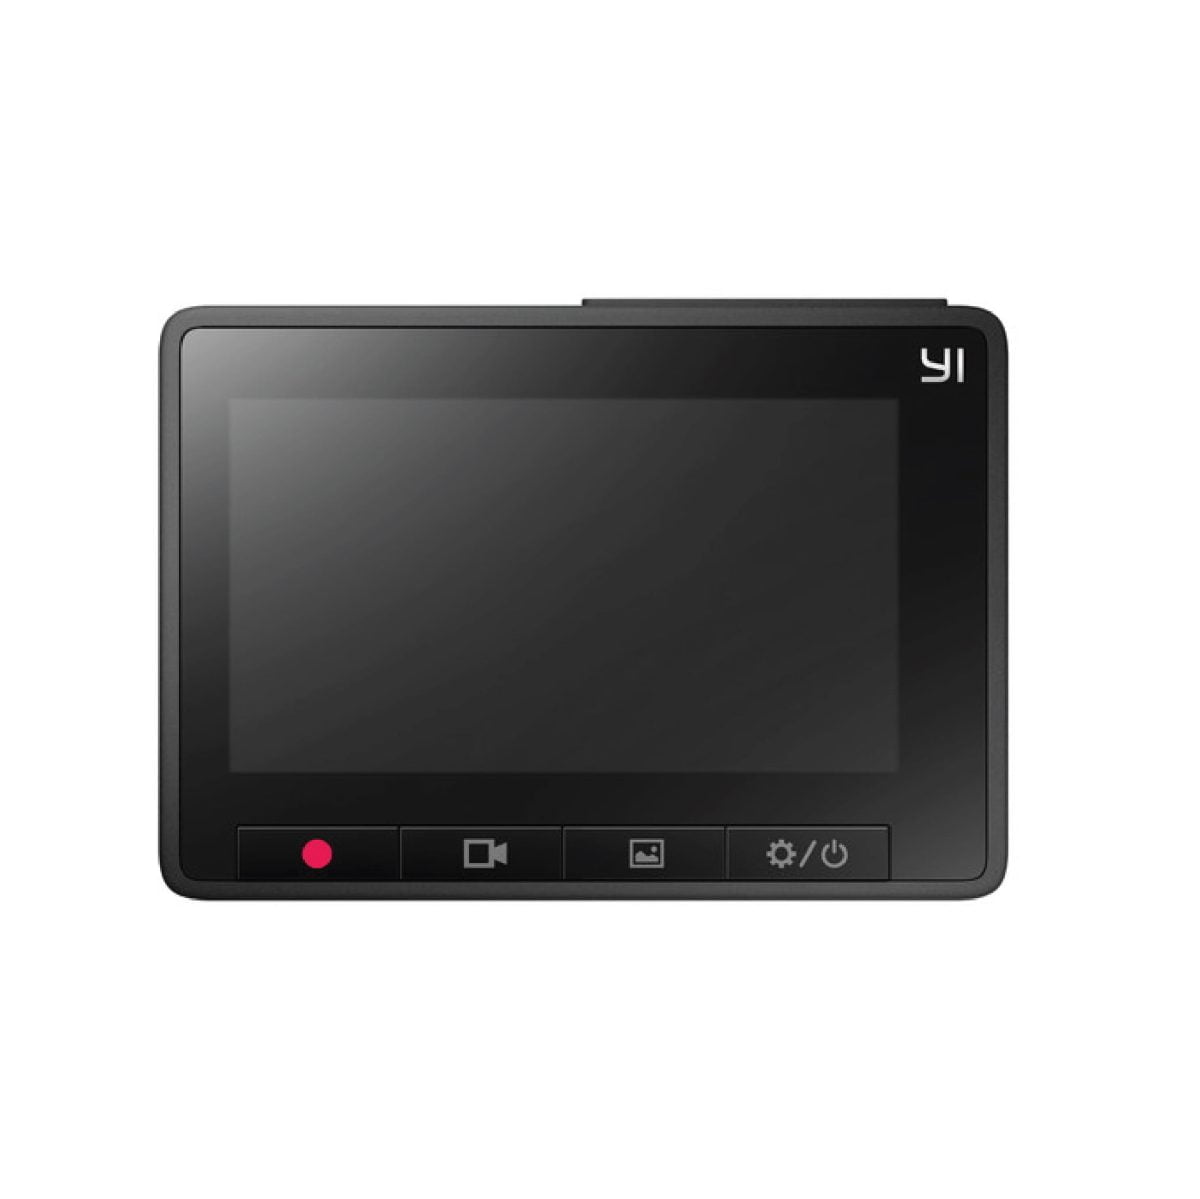 Yi Camera 04 شاومي &Lt;H1&Gt;Yi - كاميرا لوحة عدادات السيارة مدمجة مع شاشة 2.7 بوصة وعدسة 130 درجة Wdr ومستشعر G وتسجيل متكرر&Lt;/H1&Gt;
1080P60 Full Hd 165 زاوية عريضة وكاميرا لوحة القيادة الأمامية مسجل السيارة Dvr مع Adas ، G-Sensor ، تطبيق الهاتف ، Wdr ، تسجيل حلقة - رمادي Https://Youtu.be/Tsowlpdc0U4 Yi - سيارة كاميرا داش مدمجة ، كاميرا داش Yi - كاميرا لوحة عدادات السيارة مدمجة مع شاشة 2.7 بوصة وعدسة 130 درجة Wdr ومستشعر G وتسجيل متكرر